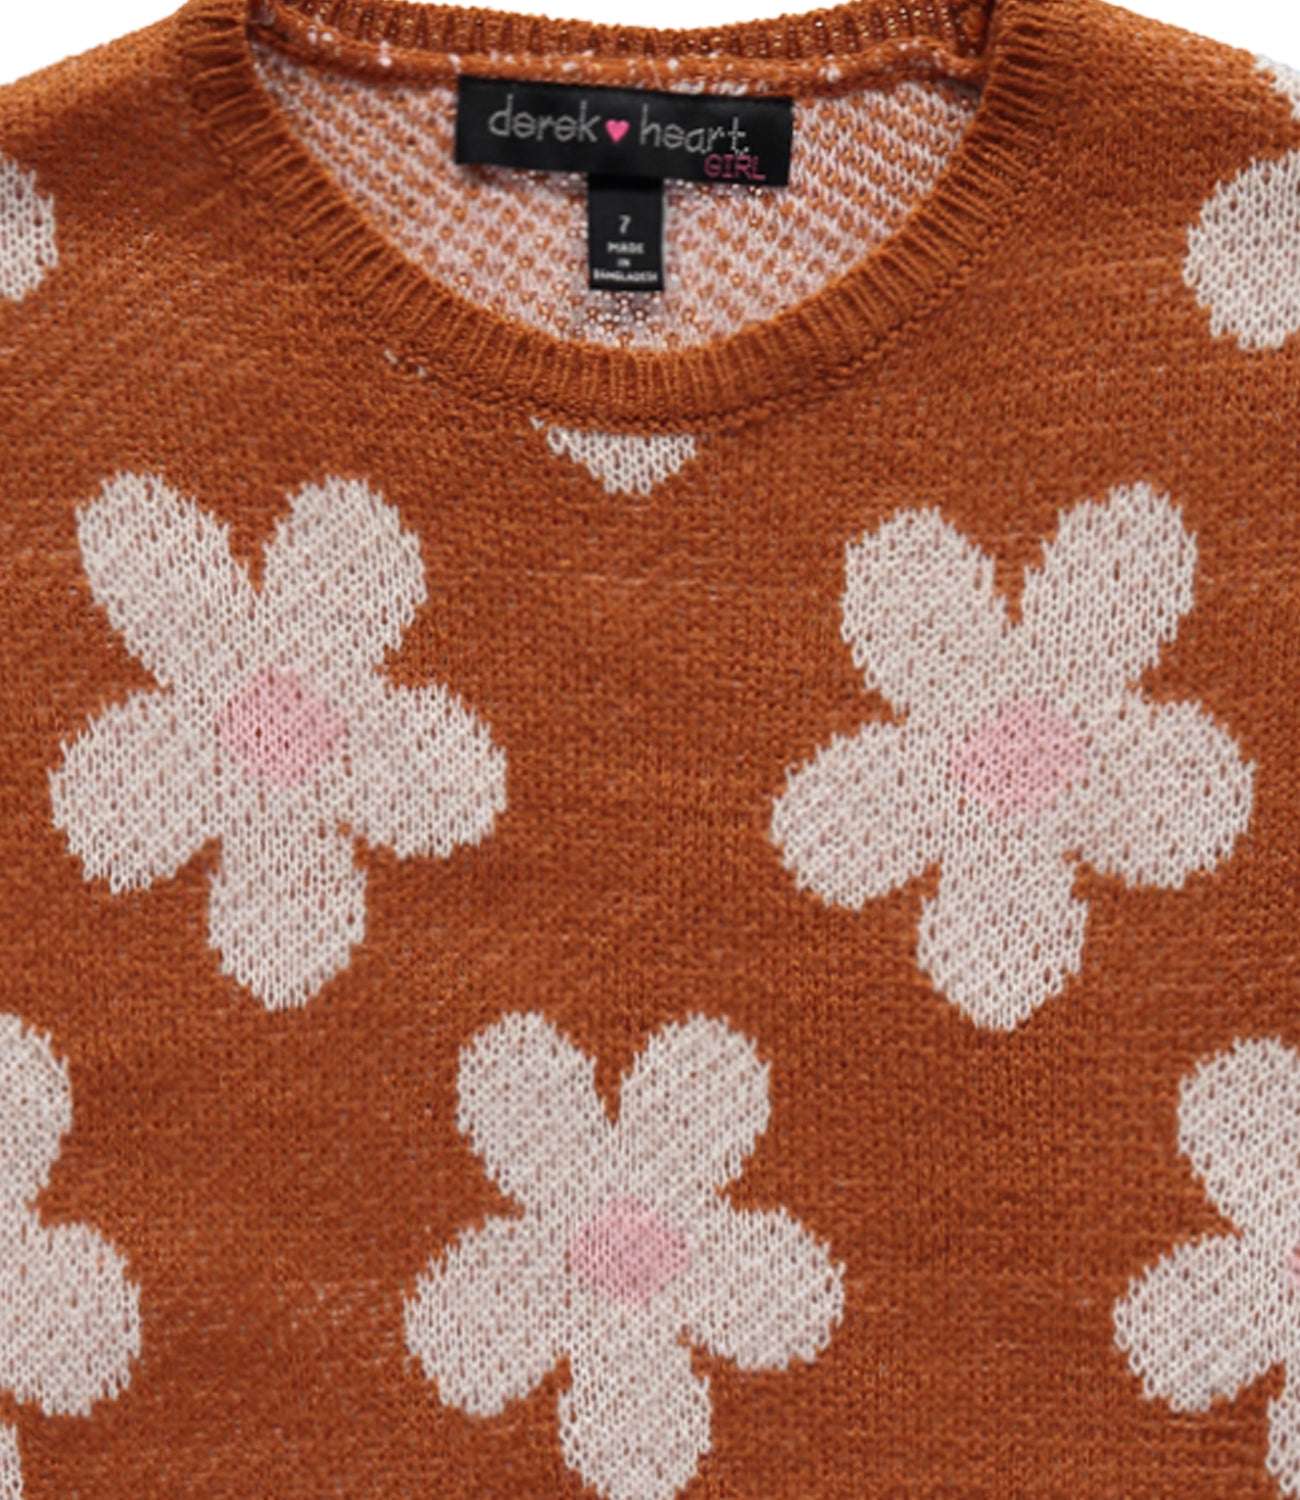 Derek Heart~100% Acrylic~ RN 104317 Sweater Dress